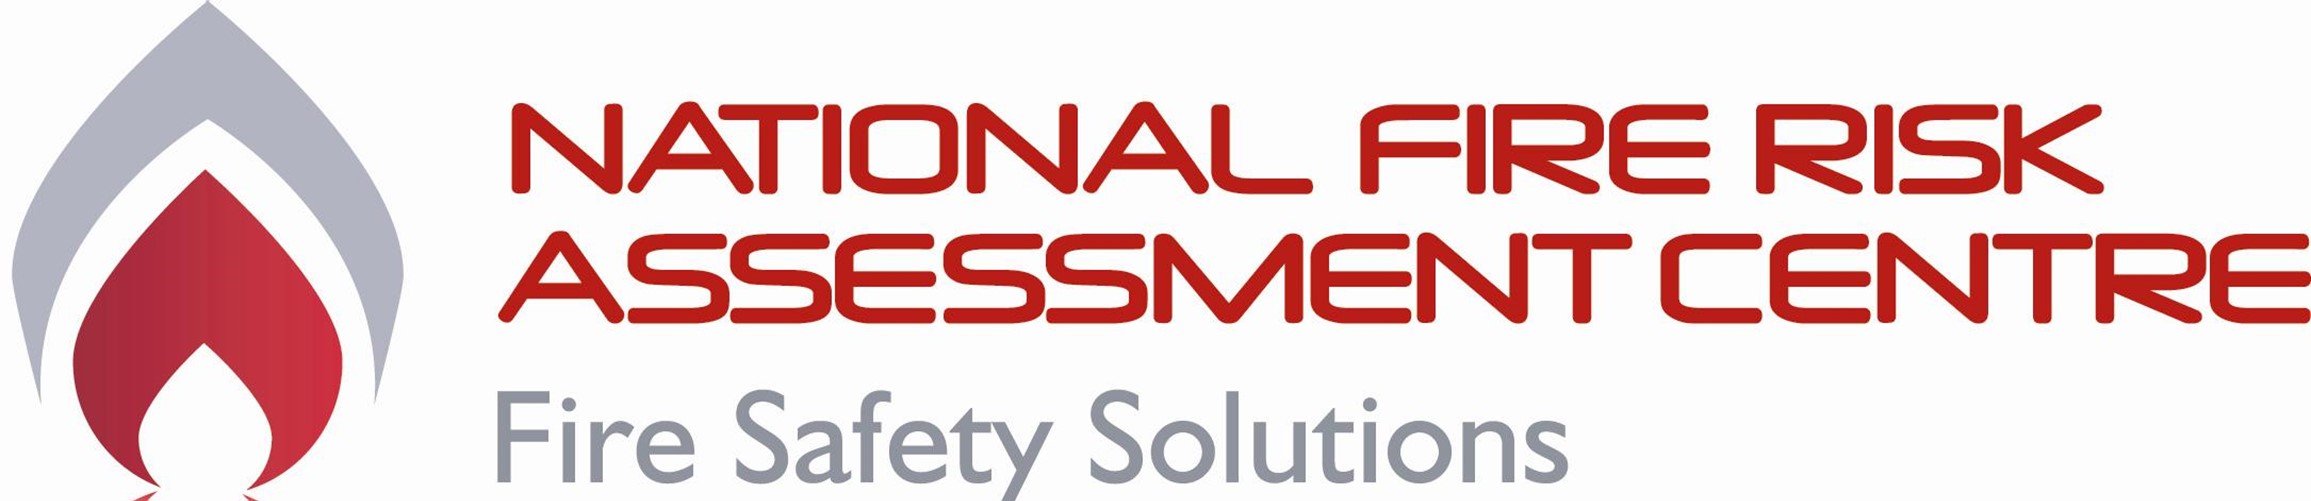 National Fire Risk Assessment Centre